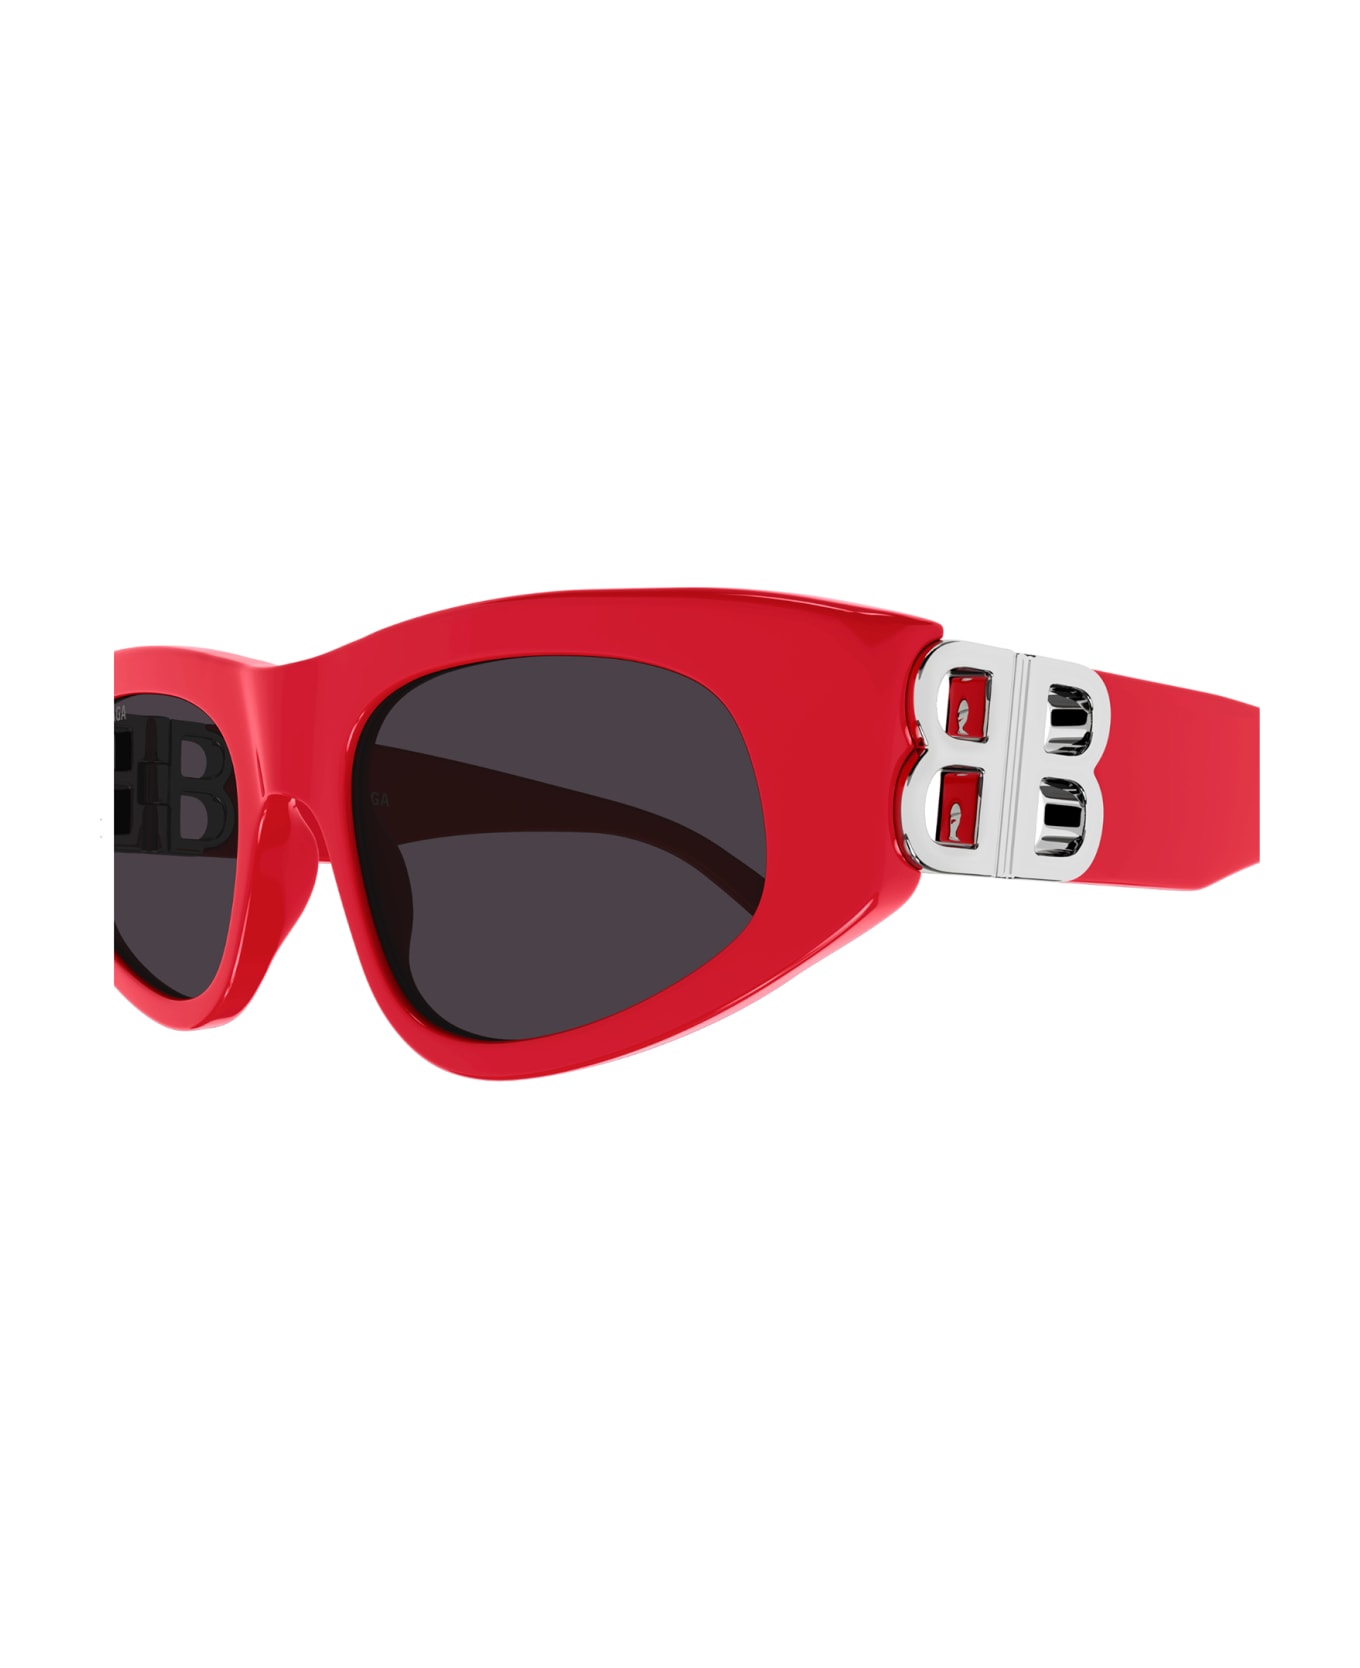 Balenciaga Eyewear BB0095S Sunglasses - Red Silver Grey